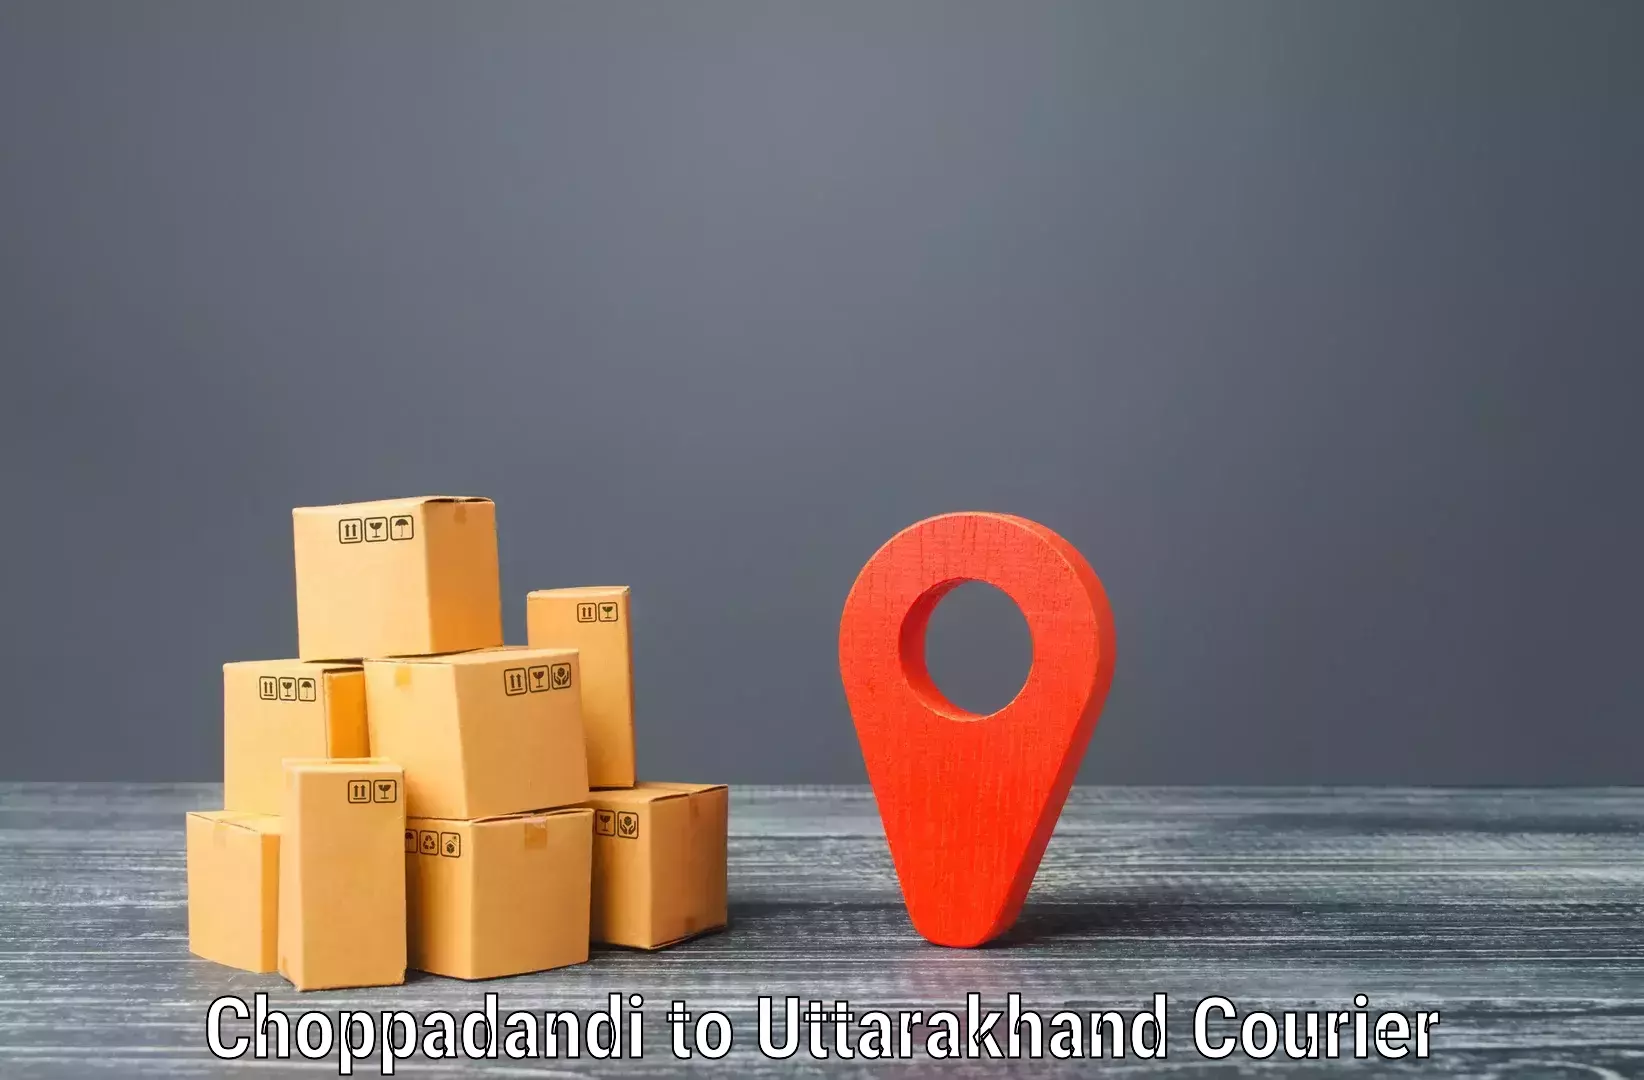 Global shipping solutions Choppadandi to Dehradun